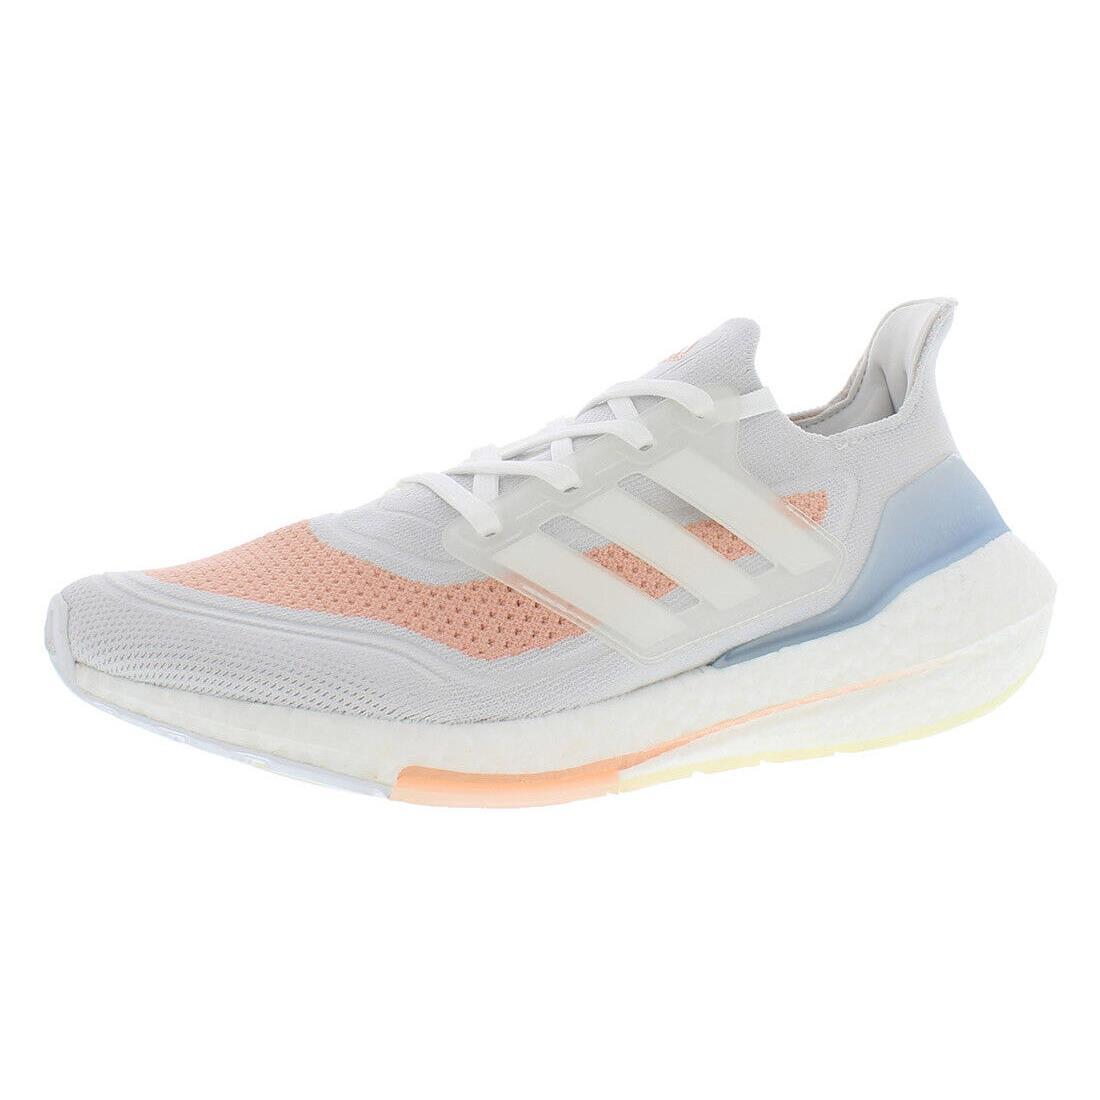 Adidas Ultraboost 21 Womens Shoes Size 7.5 Color: White/peach - White/Peach, Main: White